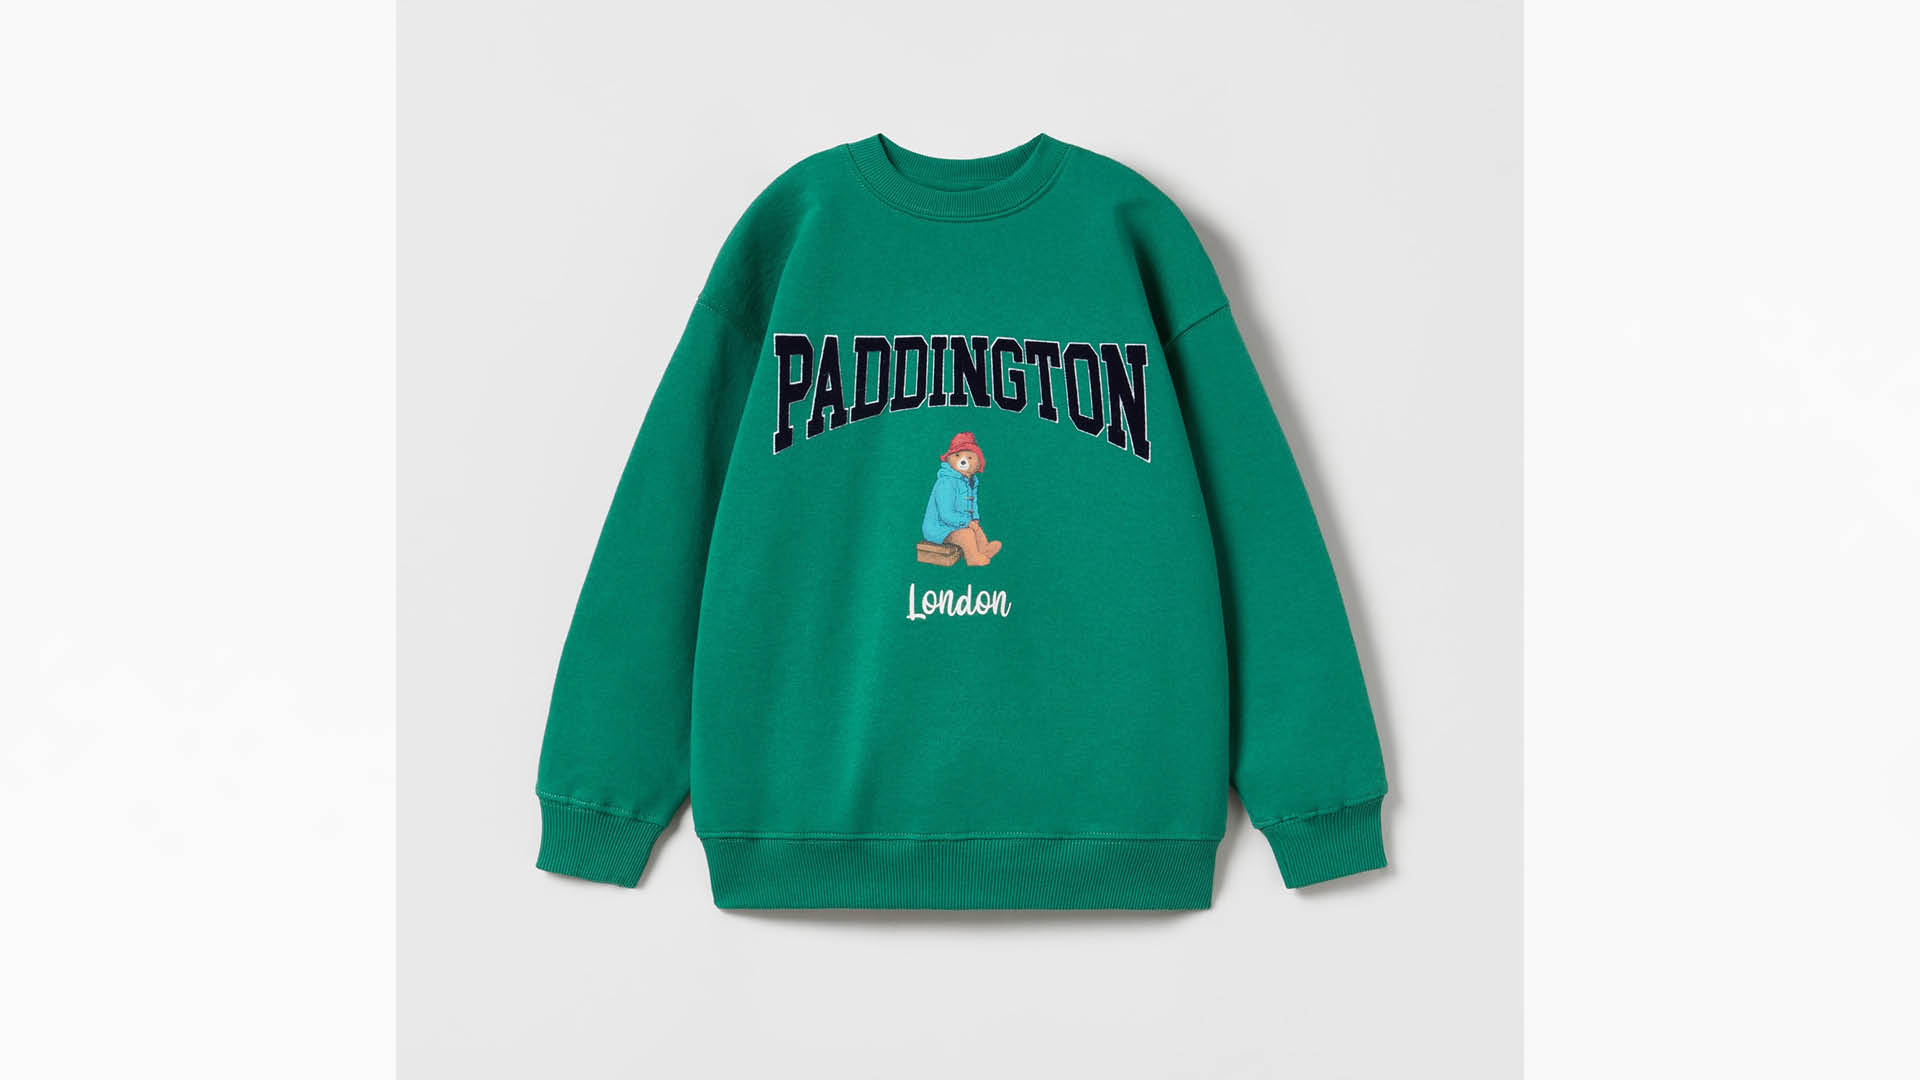 Paddington Kids Apparel Launches at Zara | License Global